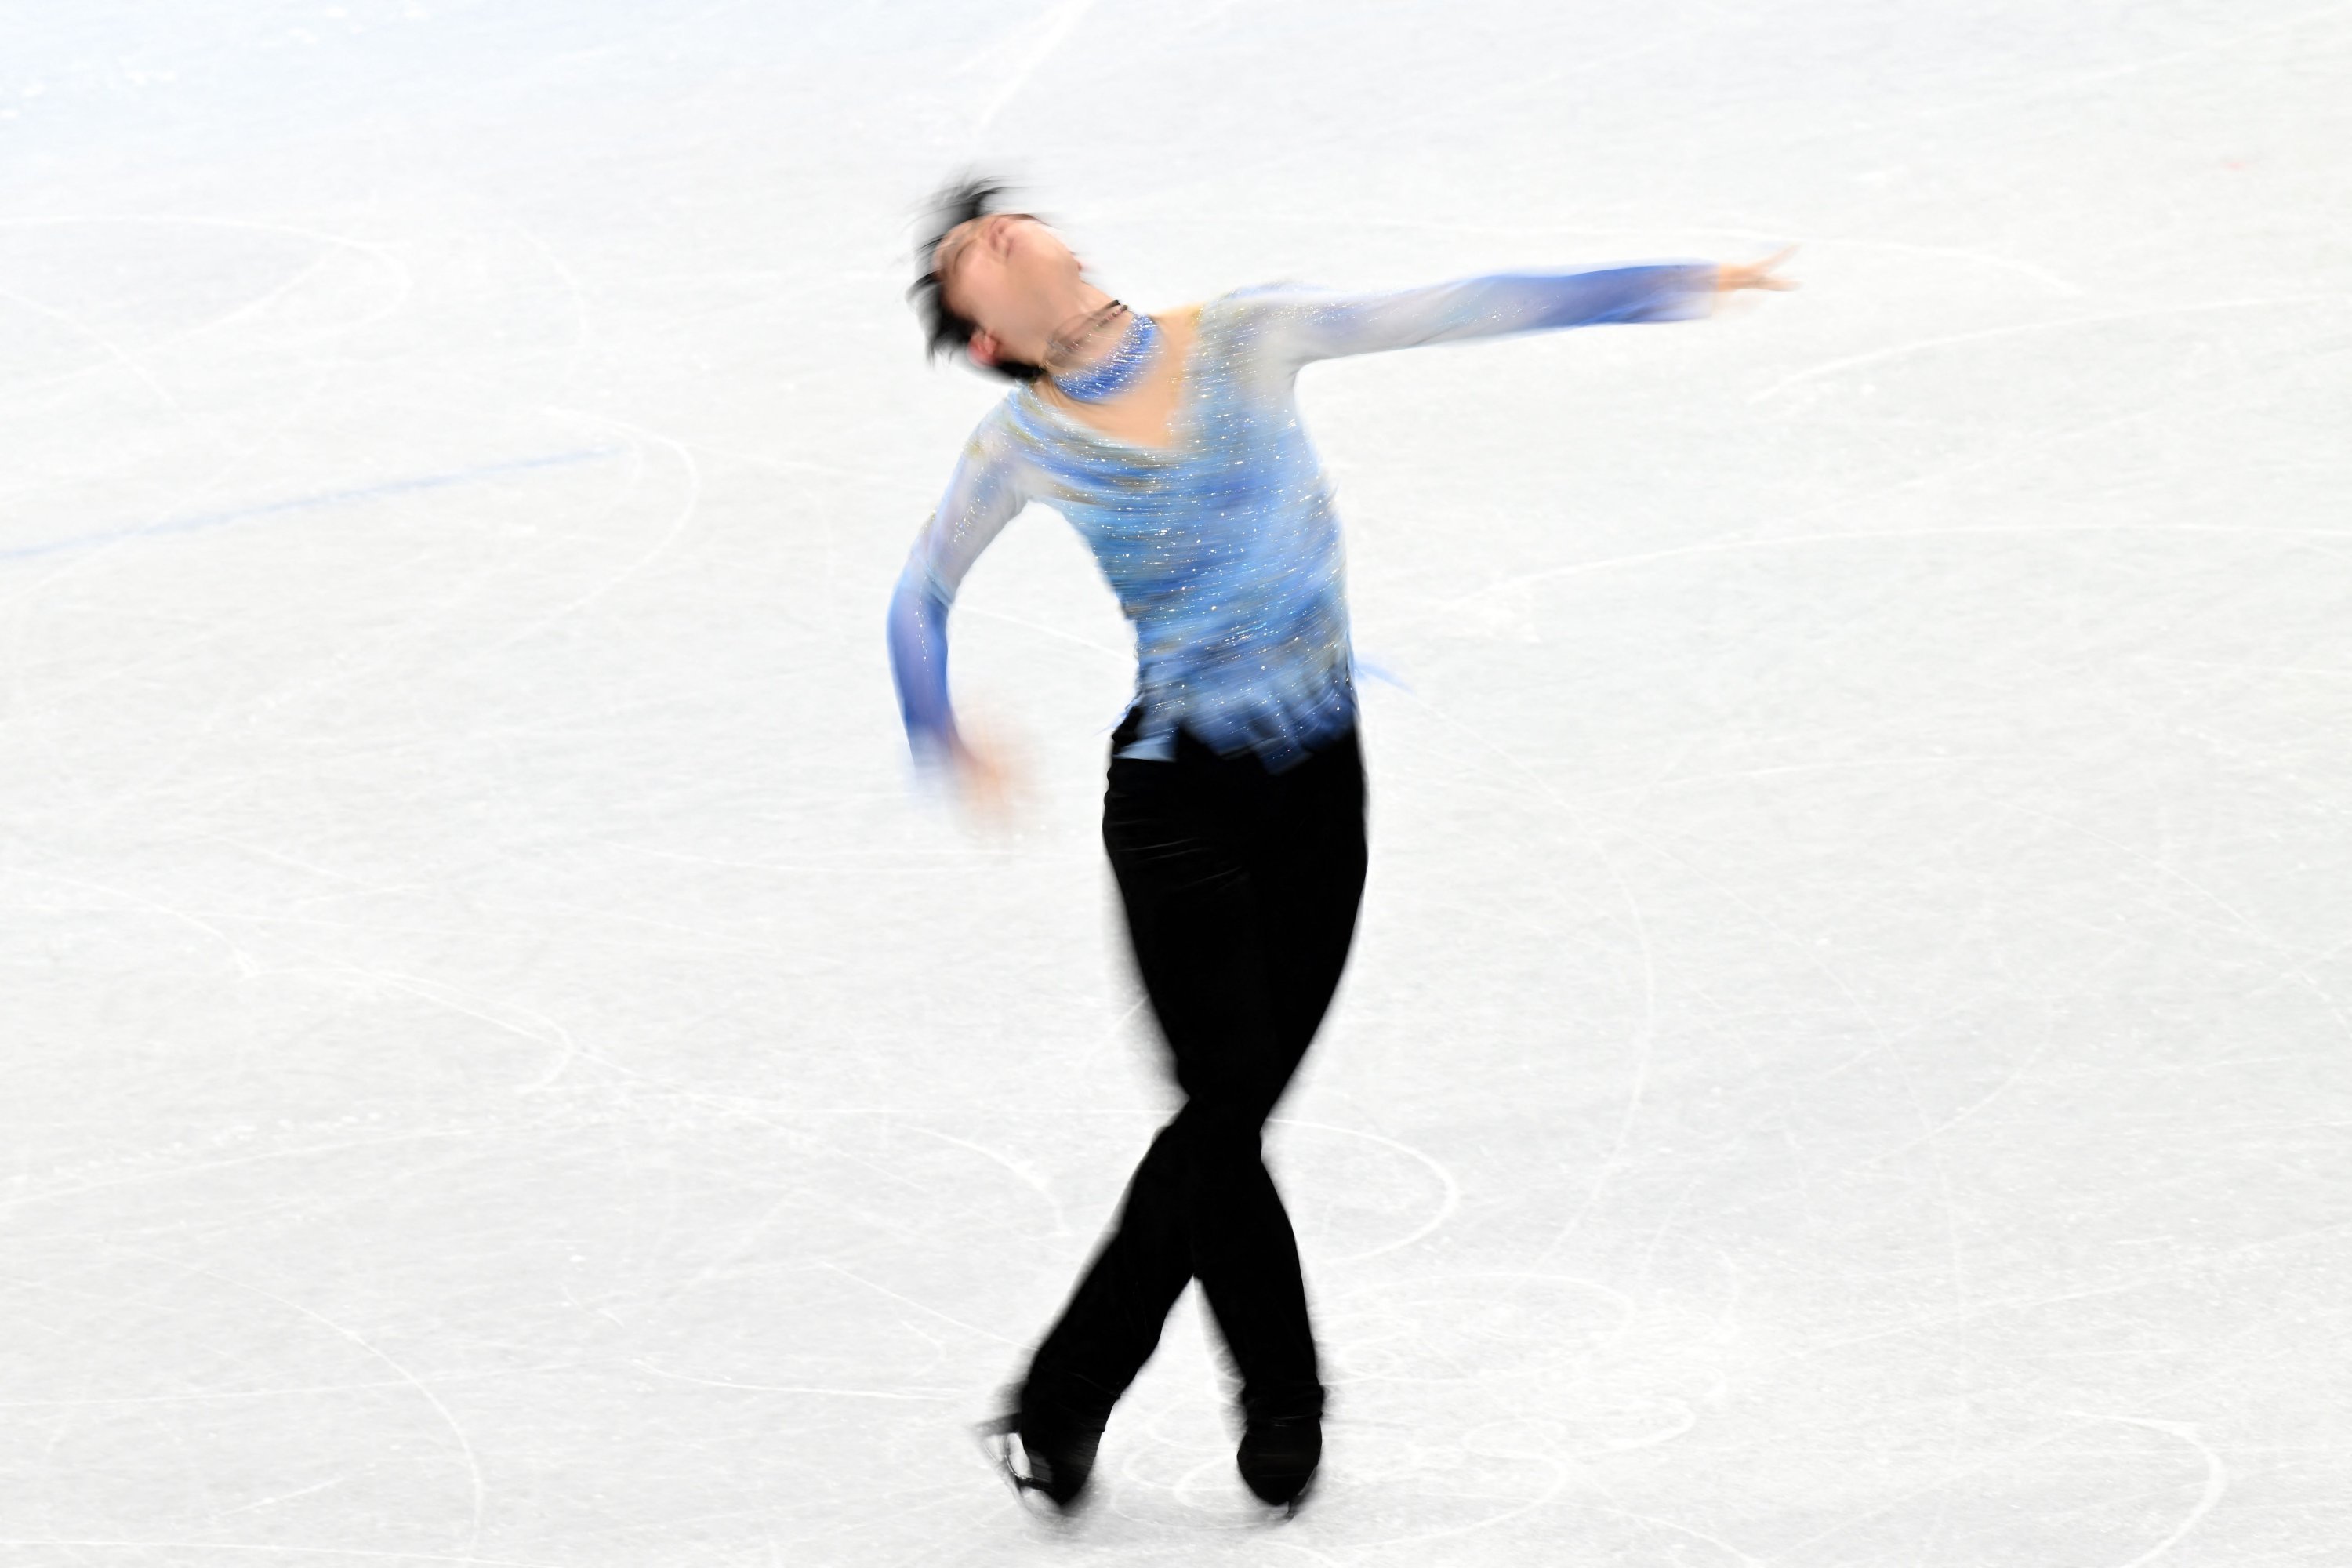 Japan's Yuzuru Hanyu competes in the Beijing 2022 Winter Olympic Games men's single skating short program of the figure skating event, Beijing, China, Feb. 8, 2022. (AFP Photo)